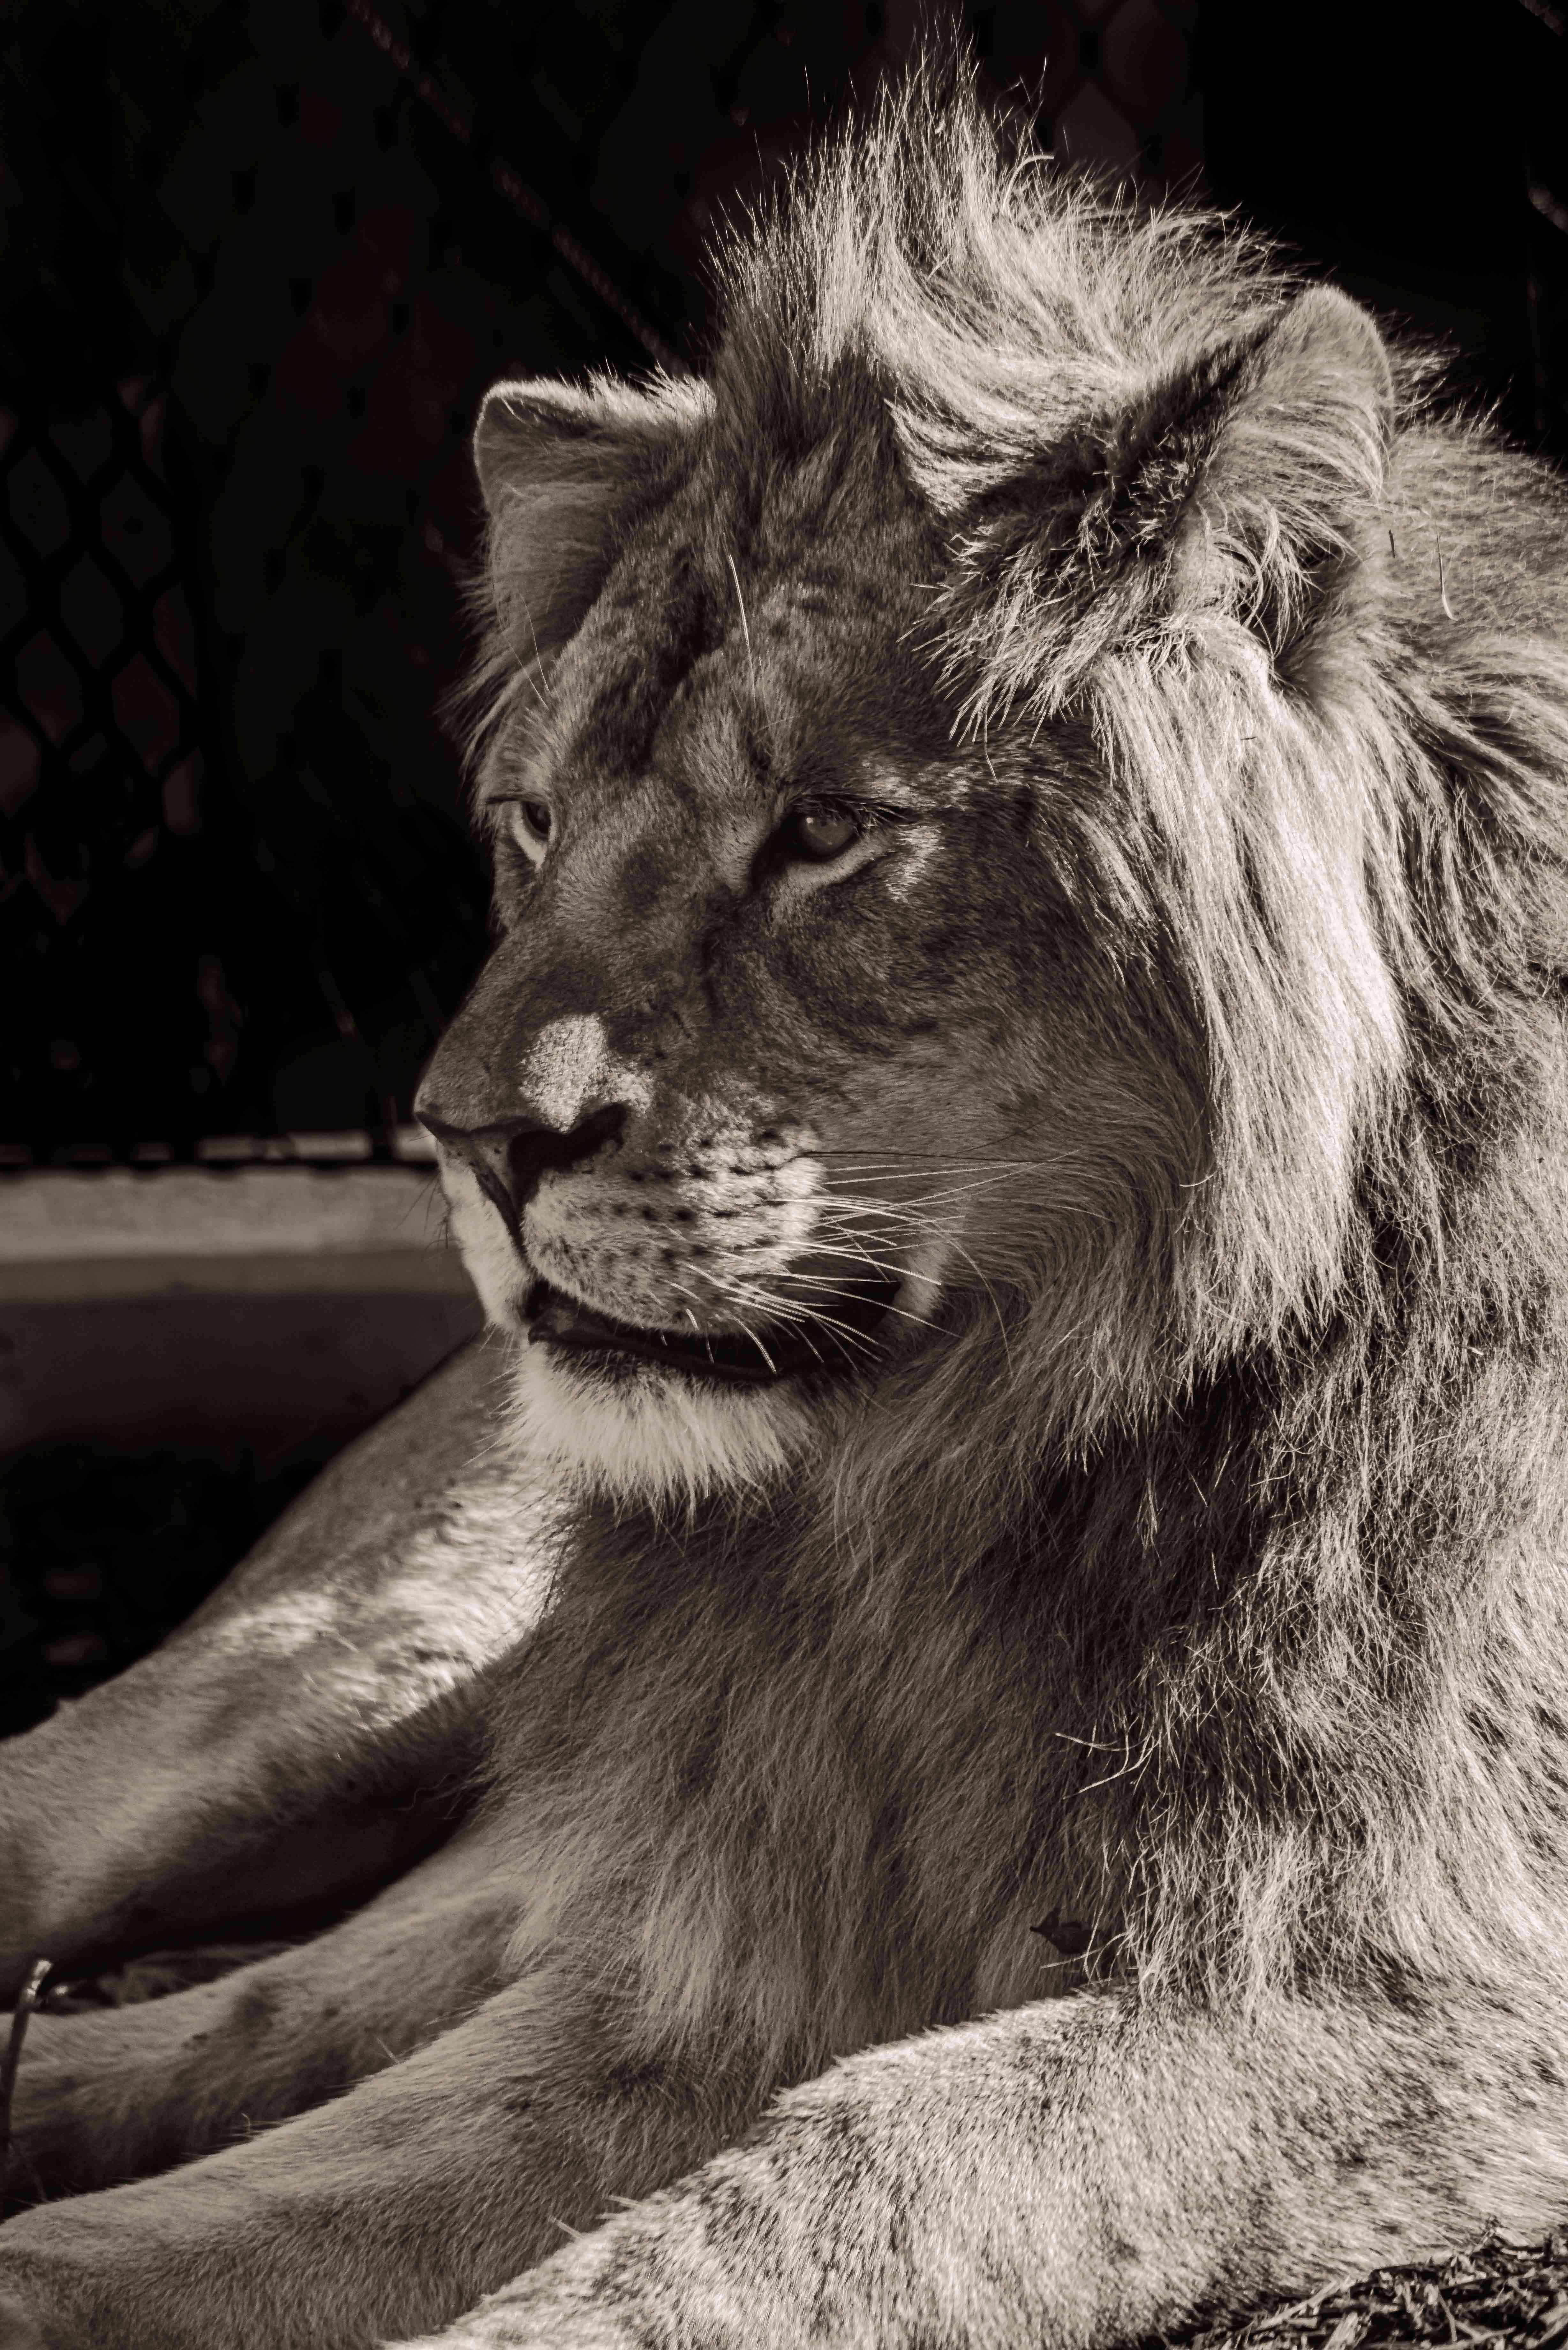 SEMD231 - DSC_7701 Sepia - 
African Savannah Lion, Taronga Zoo,  Sydney, NSW, Australia.
1st July 2020 - 2.43pm
Camera - Nikon D800 
F8 - ISO 800 - 1/640 second - Focal Length 300mm : Wildlife - Sepia : Stephen E-Moran - Fine Art Photography